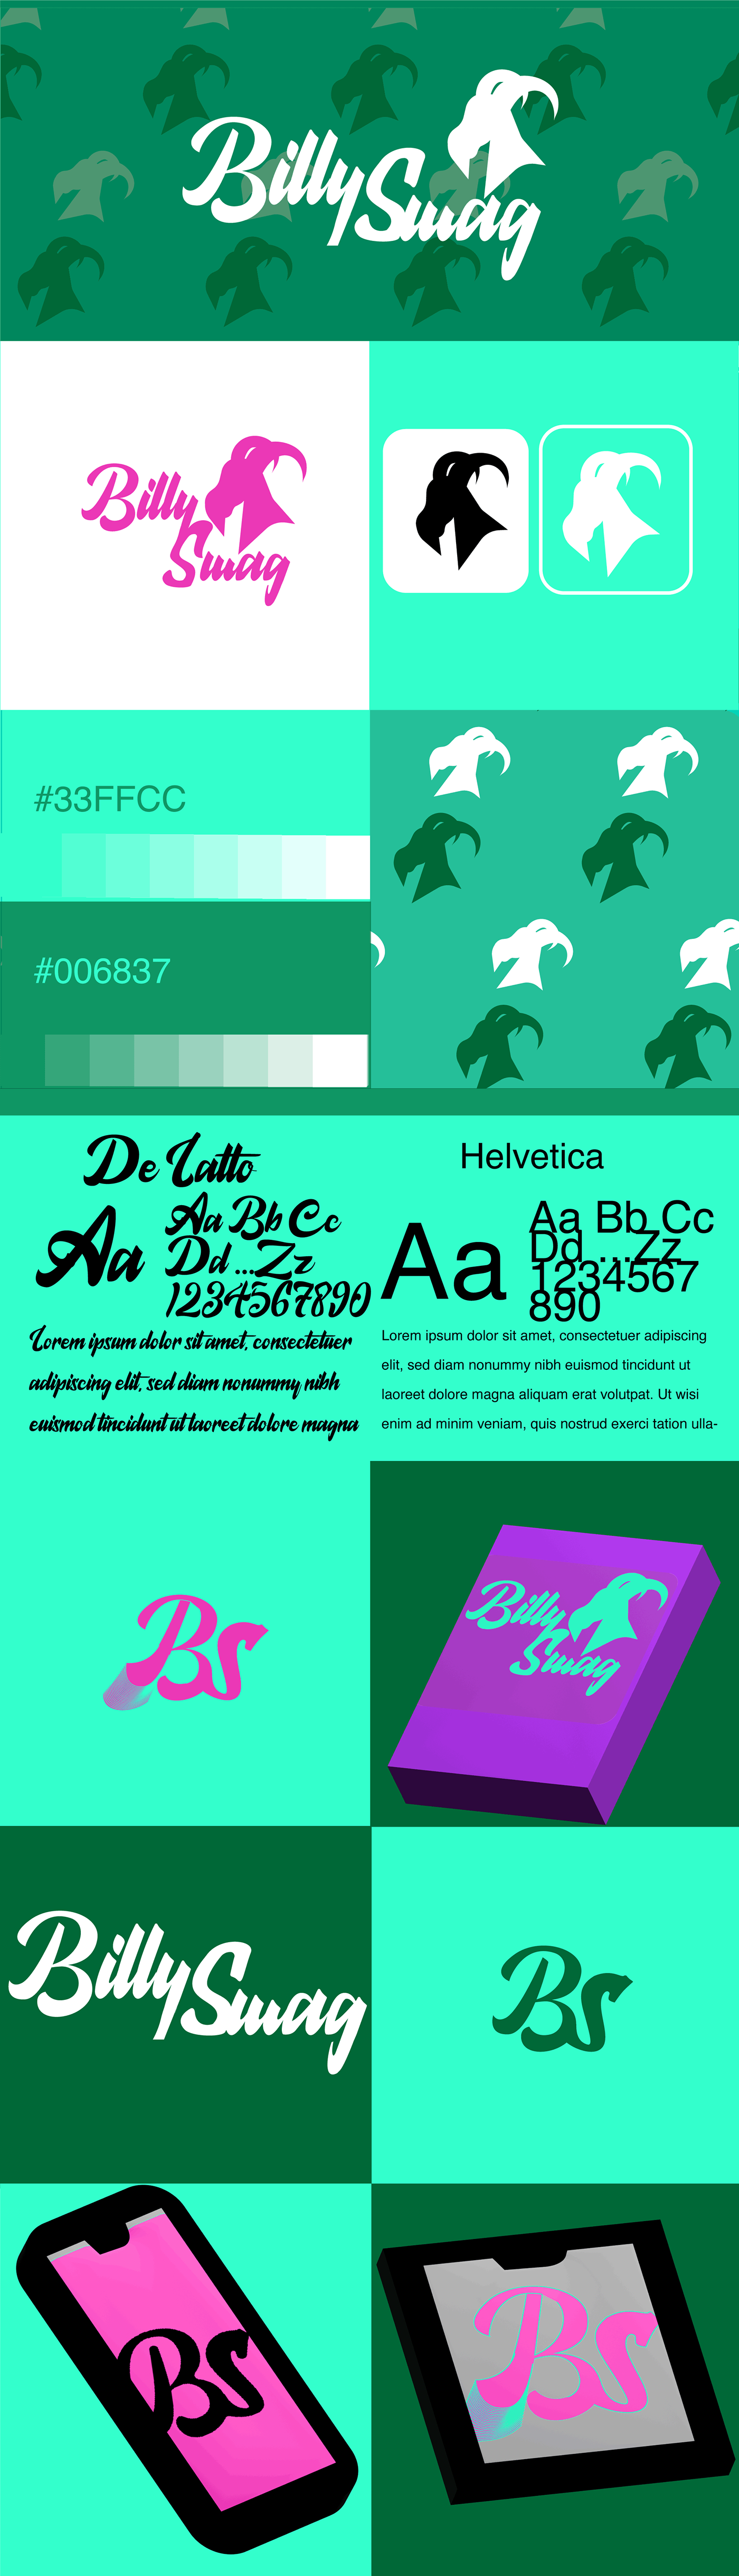 logos branding kit brand identity goats adobe illustrator